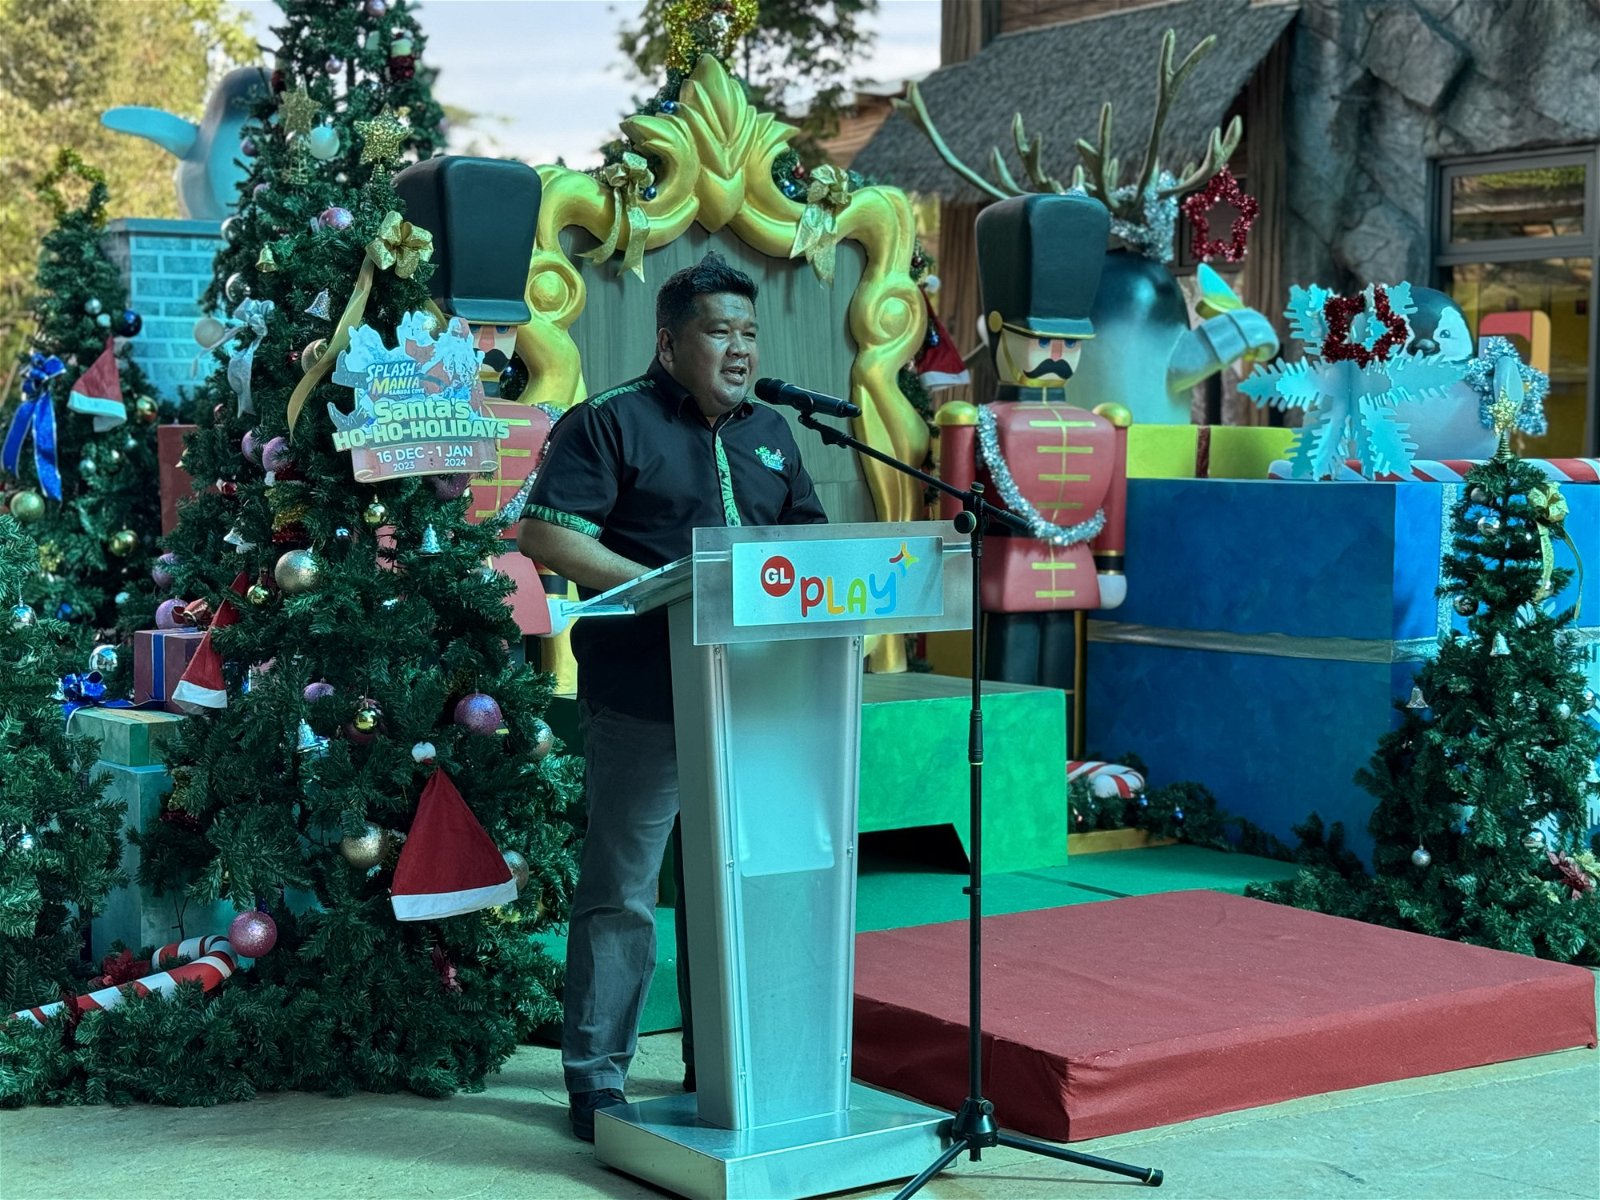 Gamuda Land休闲和款待总经理N.Sanjay介绍了SplashMania圣诞主题——SplashMania Santa's Ho-Ho-Holidays的启动。